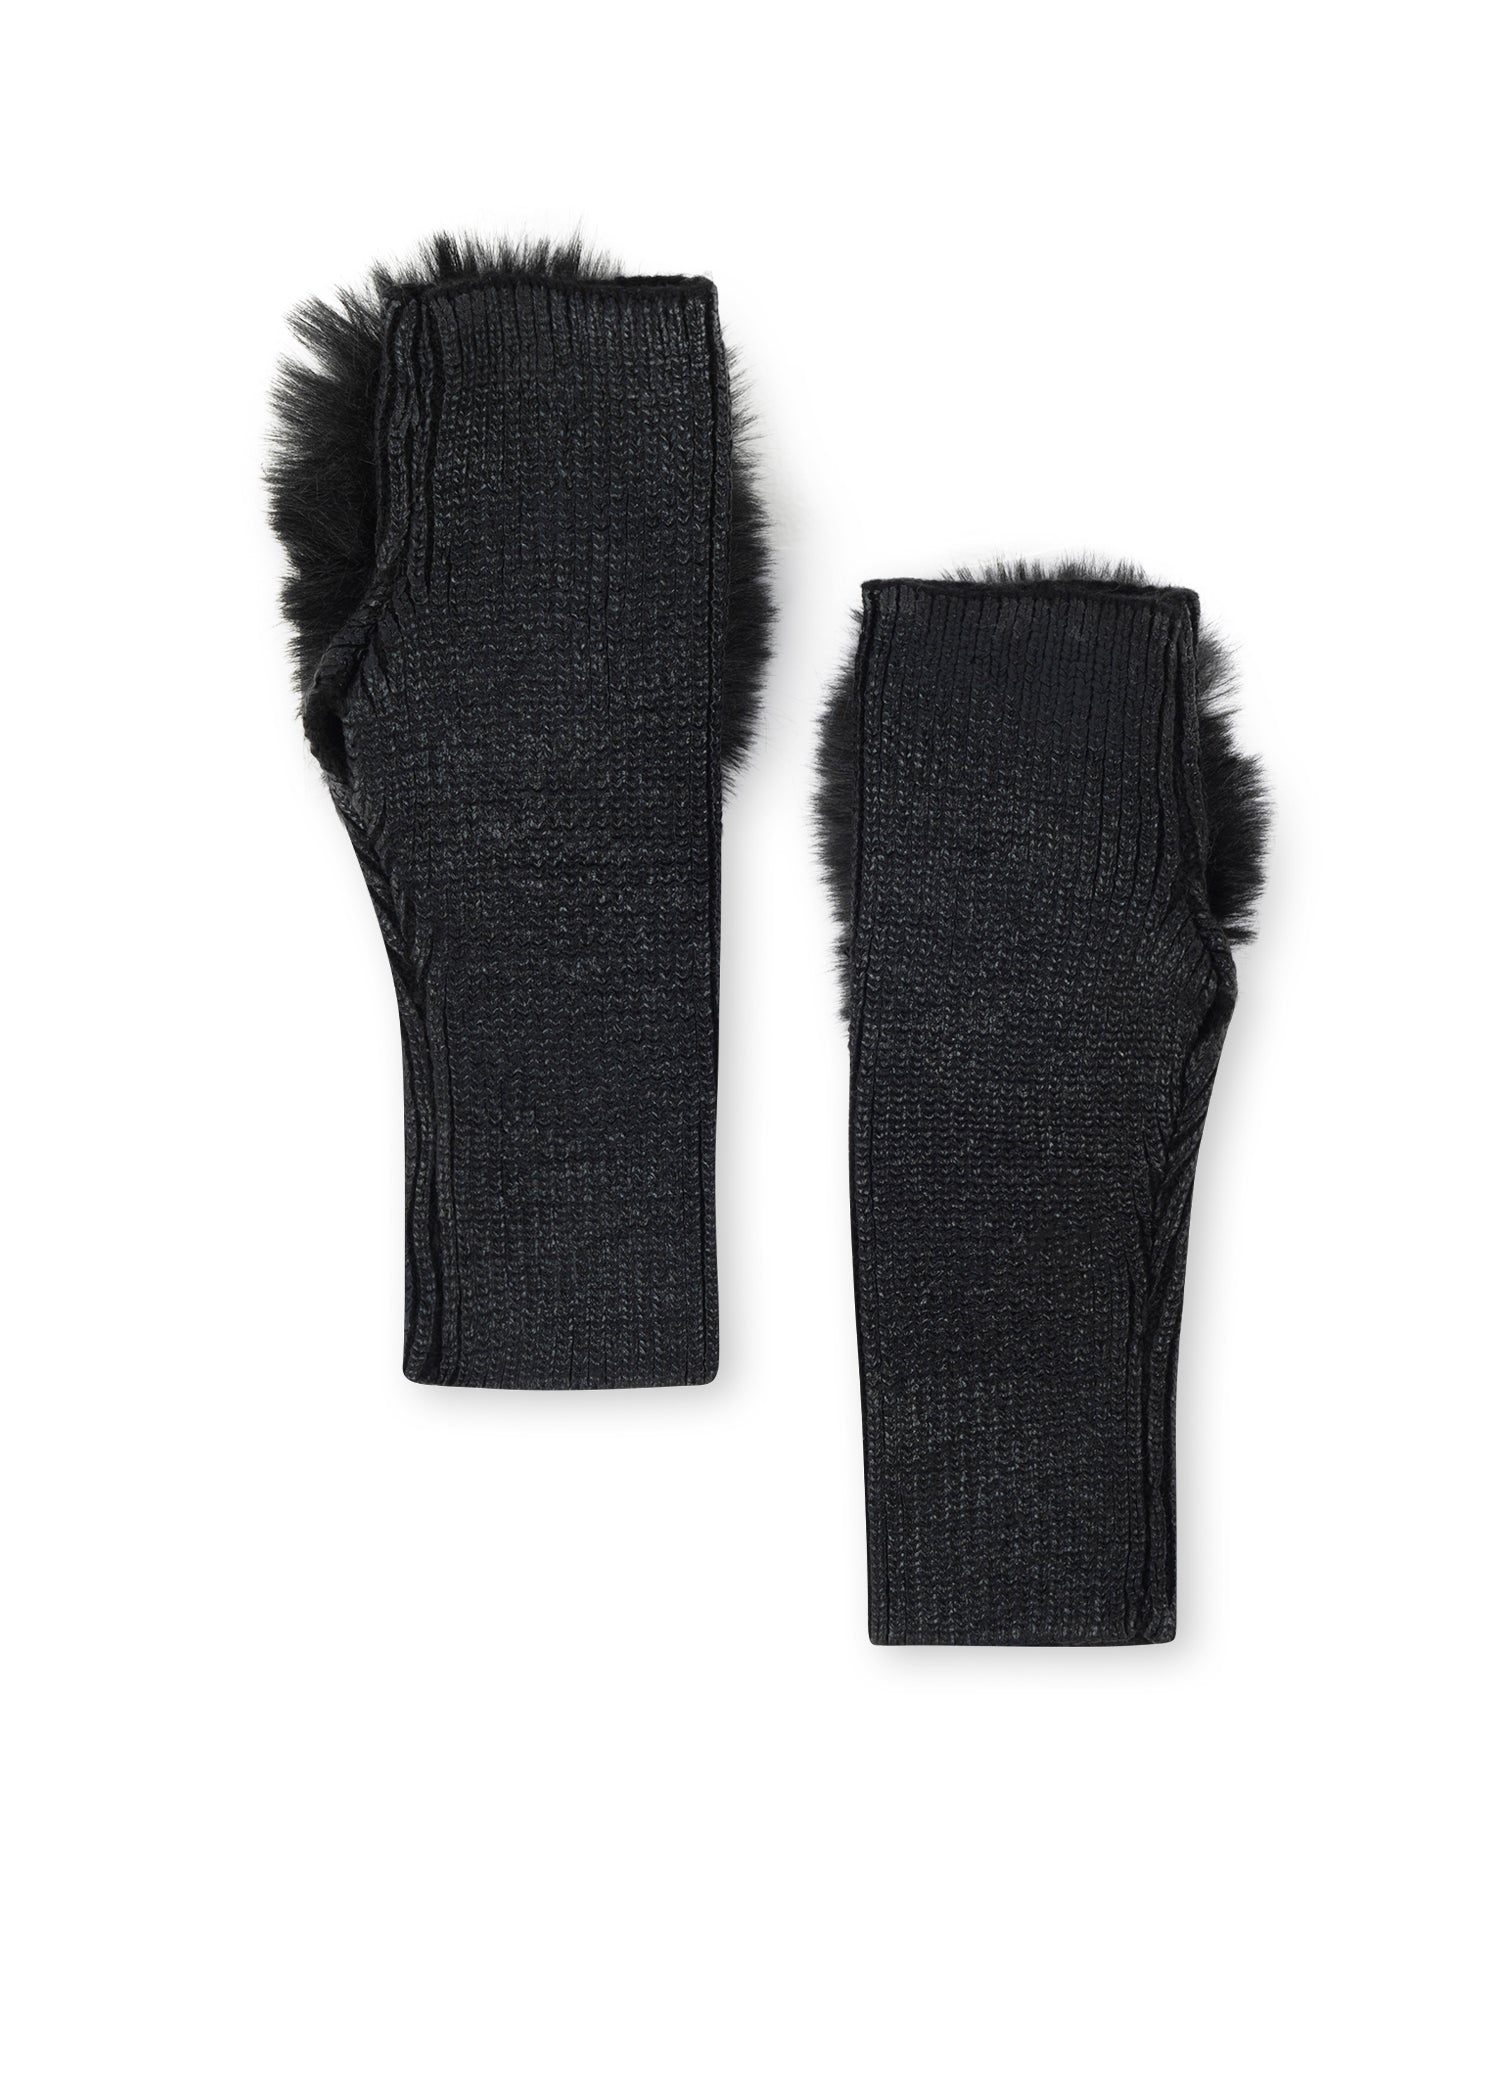 Metallic Black Fluff Fingerless Glove